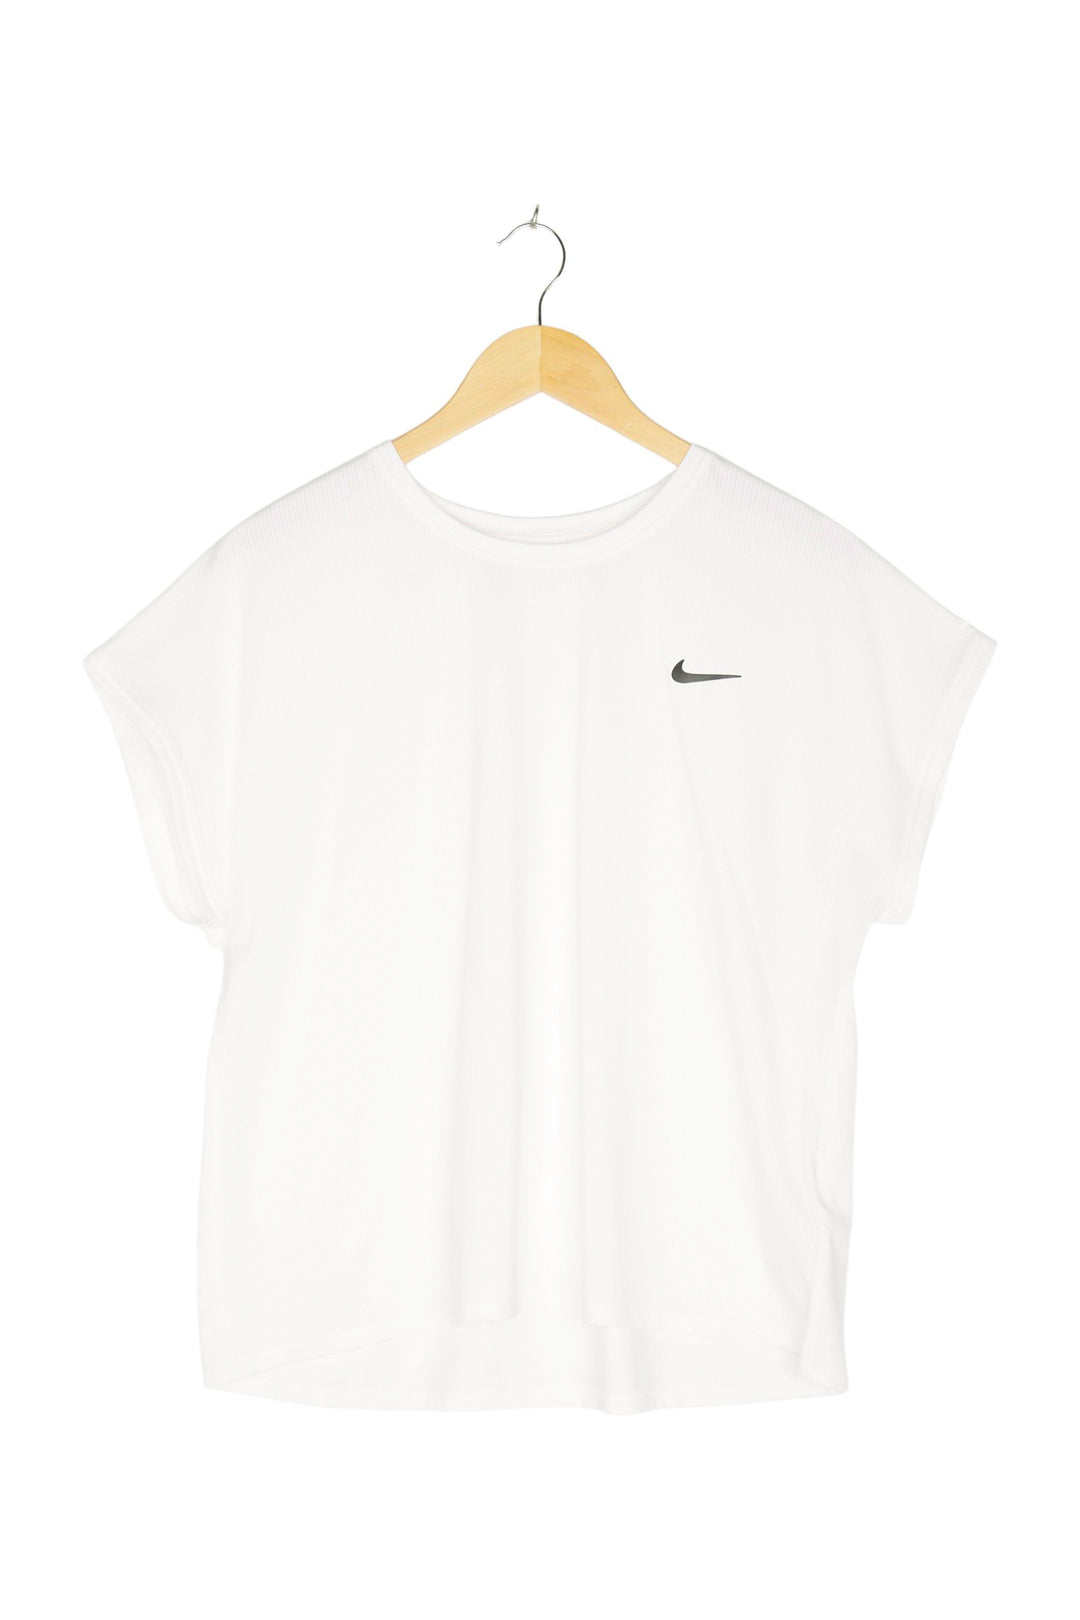 Nike Tennisshirt für Damen